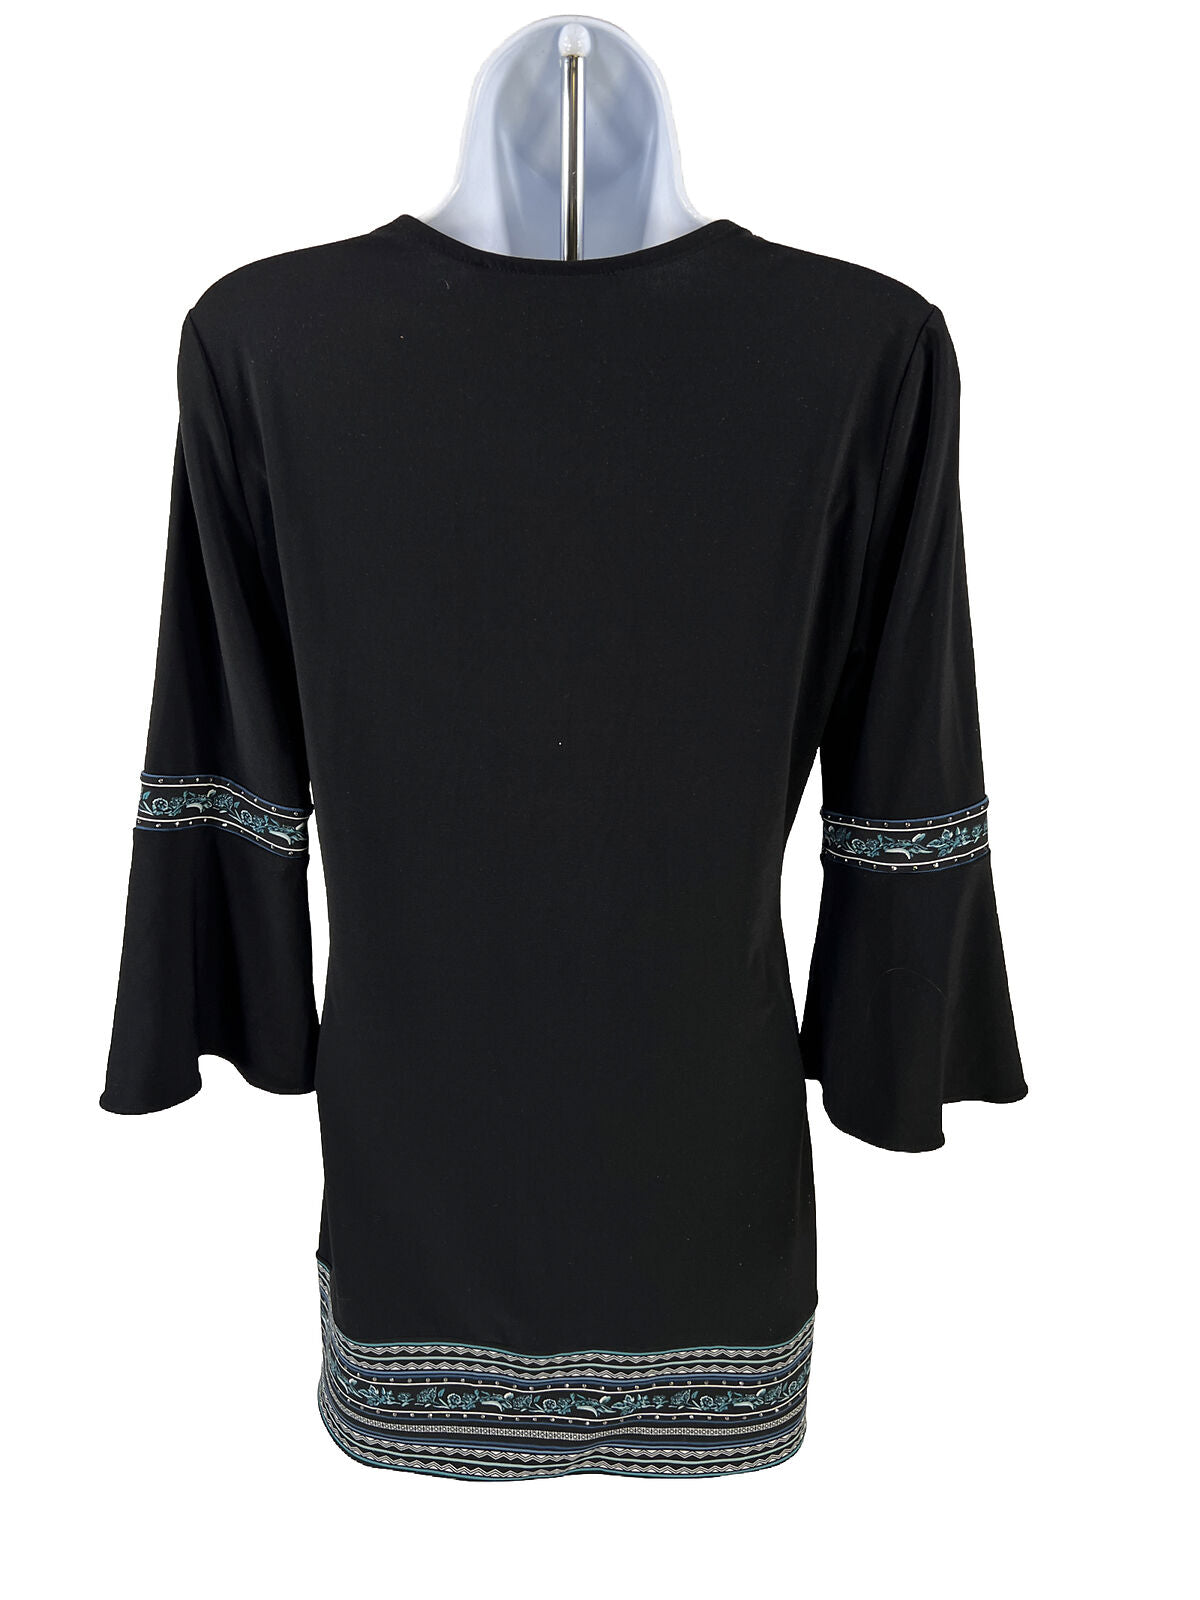 White House Black Market Women's Black Embroidered Tunic Blouse - XS